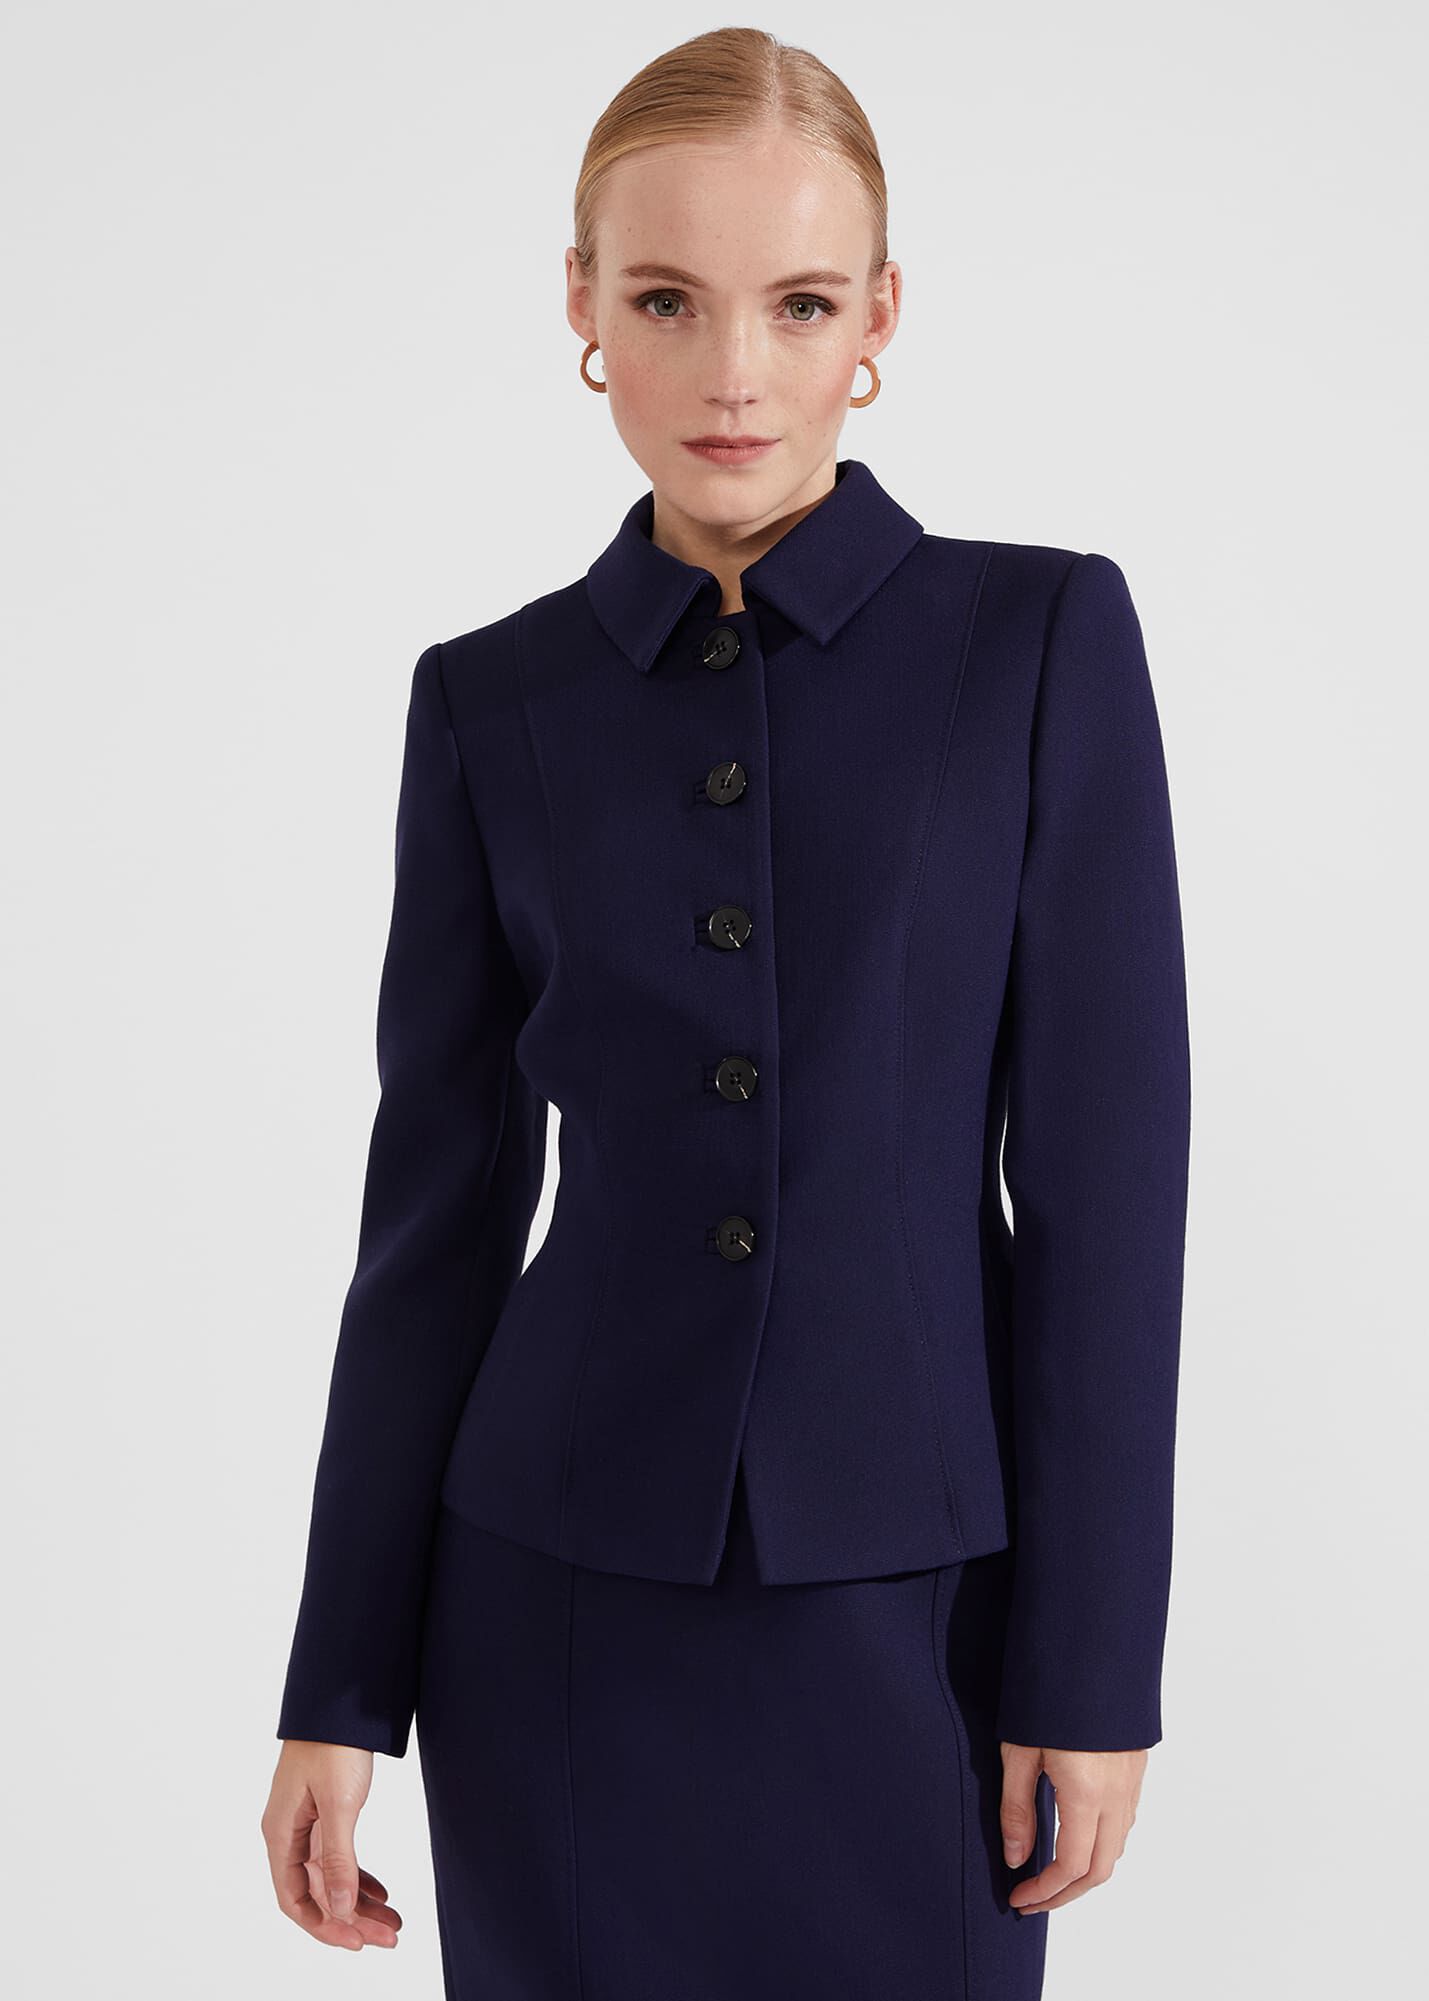 Shop Business Formal Stretch Skirt Suit For Women - Lavender